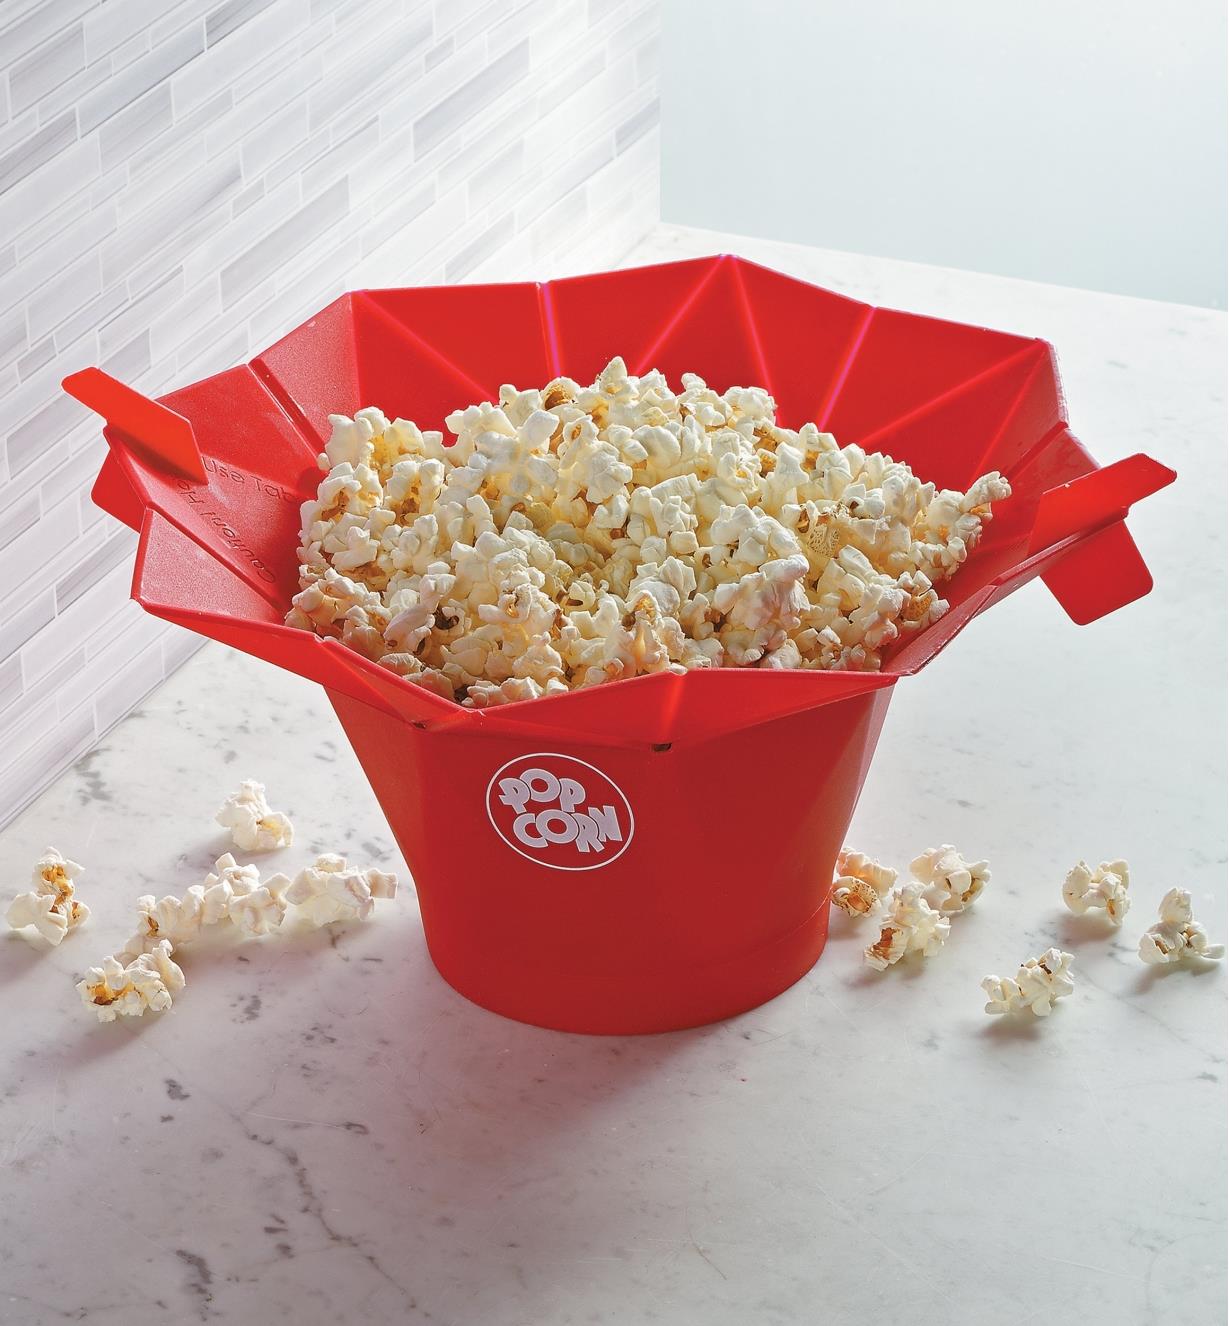 Poptop Popcorn Popper filled with popped popcorn